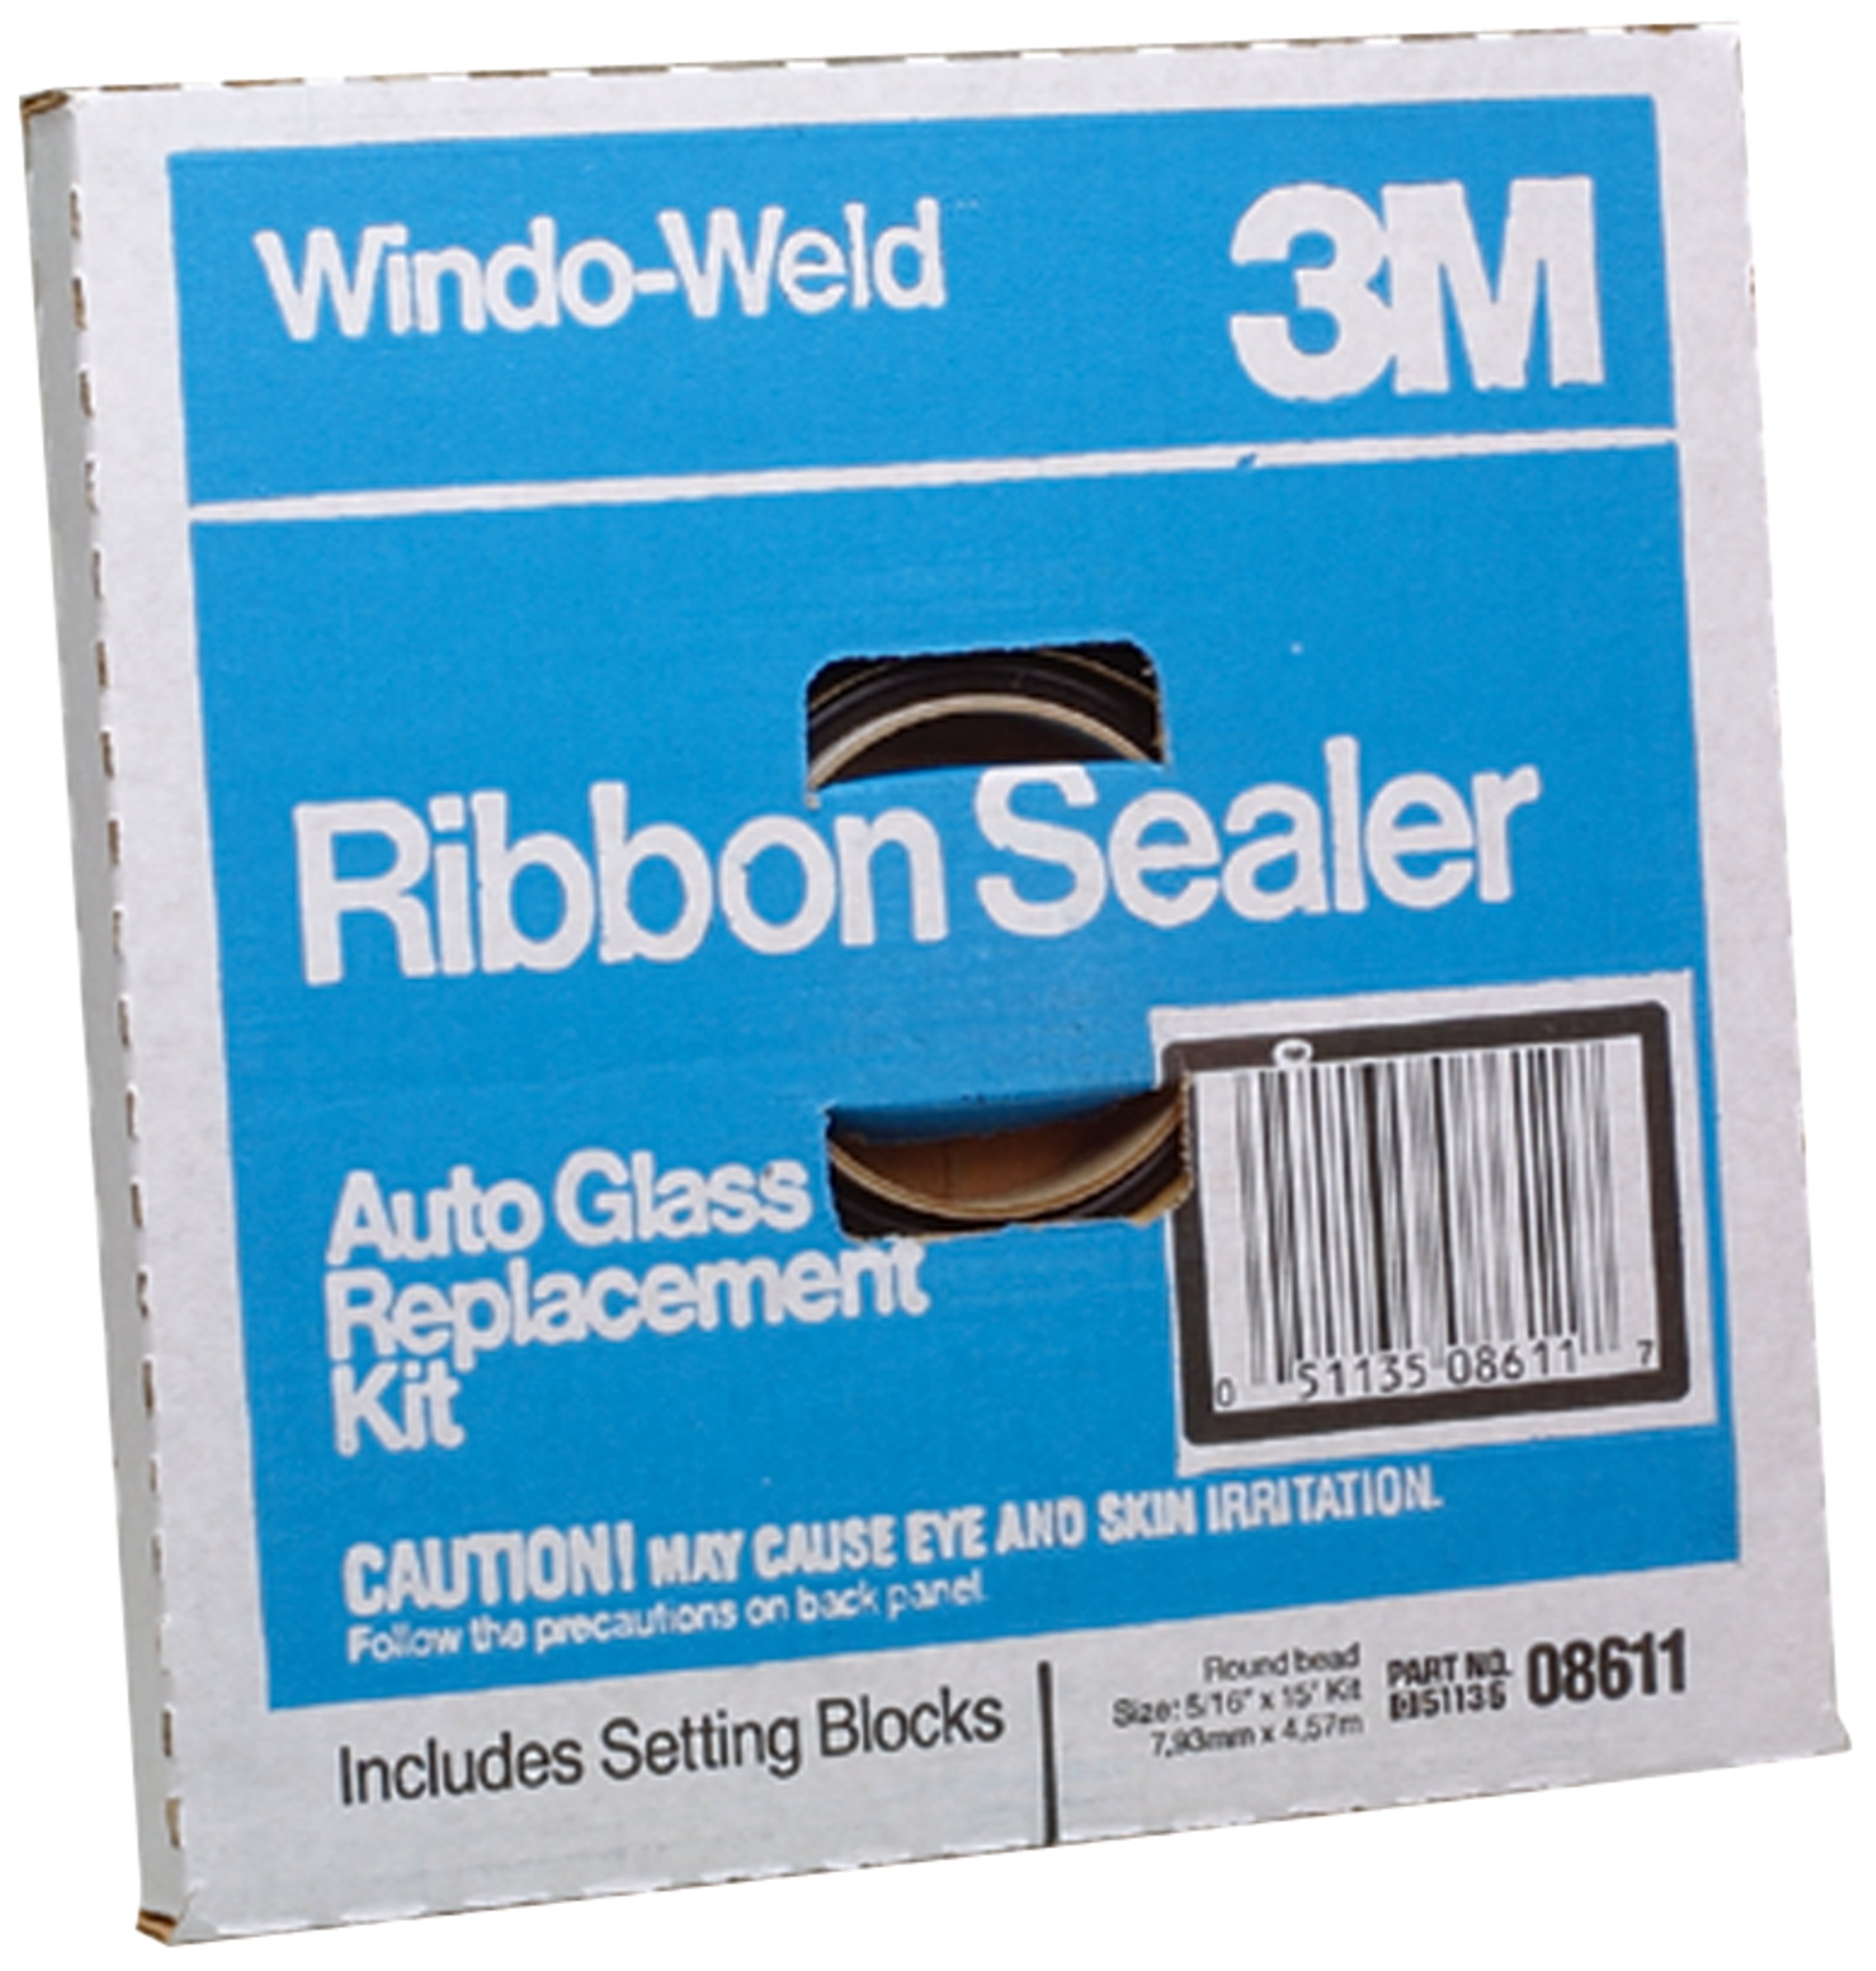 3M™ Windo-Weld™ Round Ribbon Sealer 3/8 in x 15 ft Kit 08612 